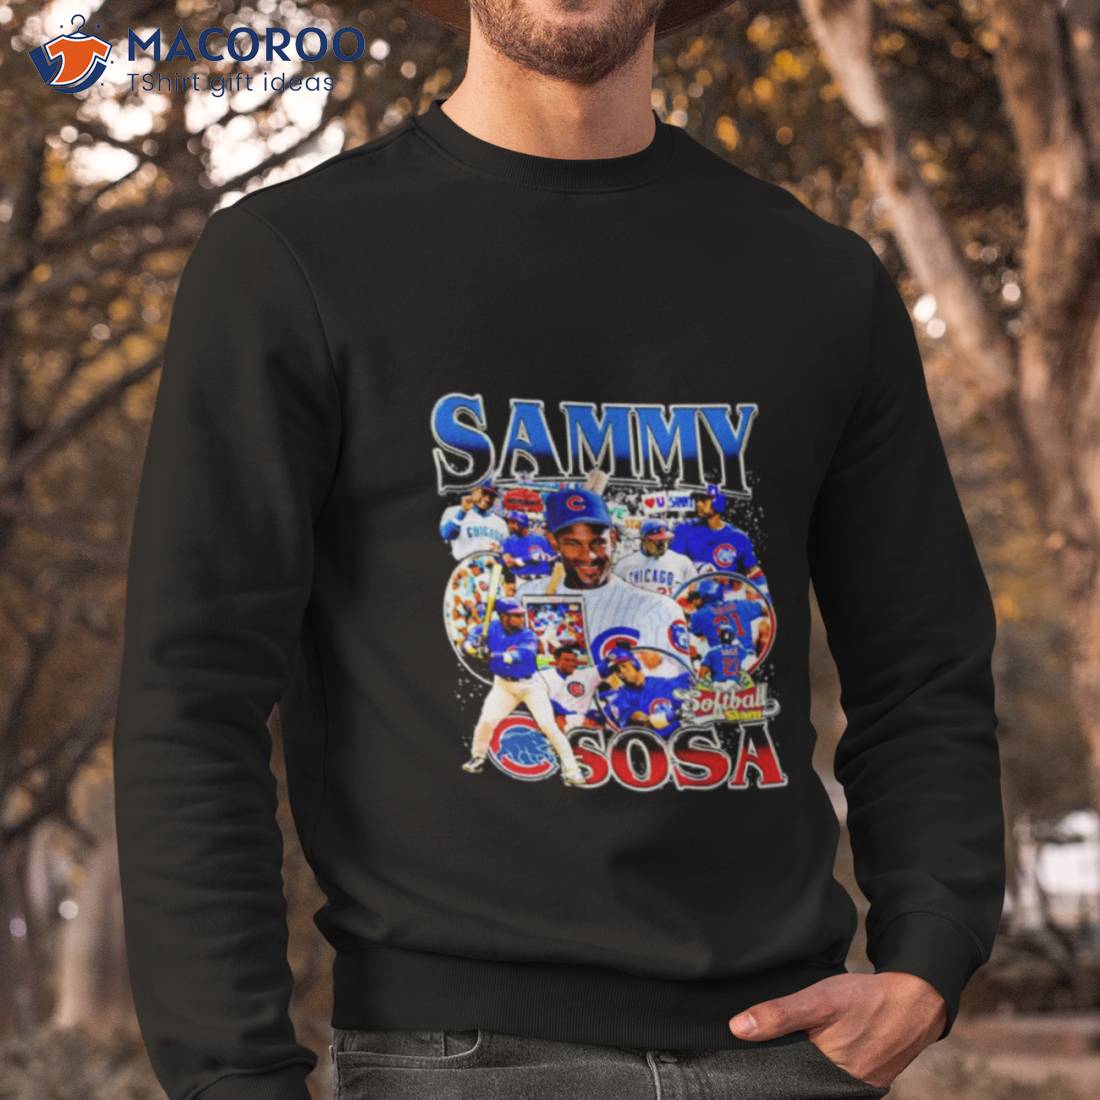 Vintage MLB 1989 Chicago Cubs Crewneck Sweatshirt Gift Unisex Men